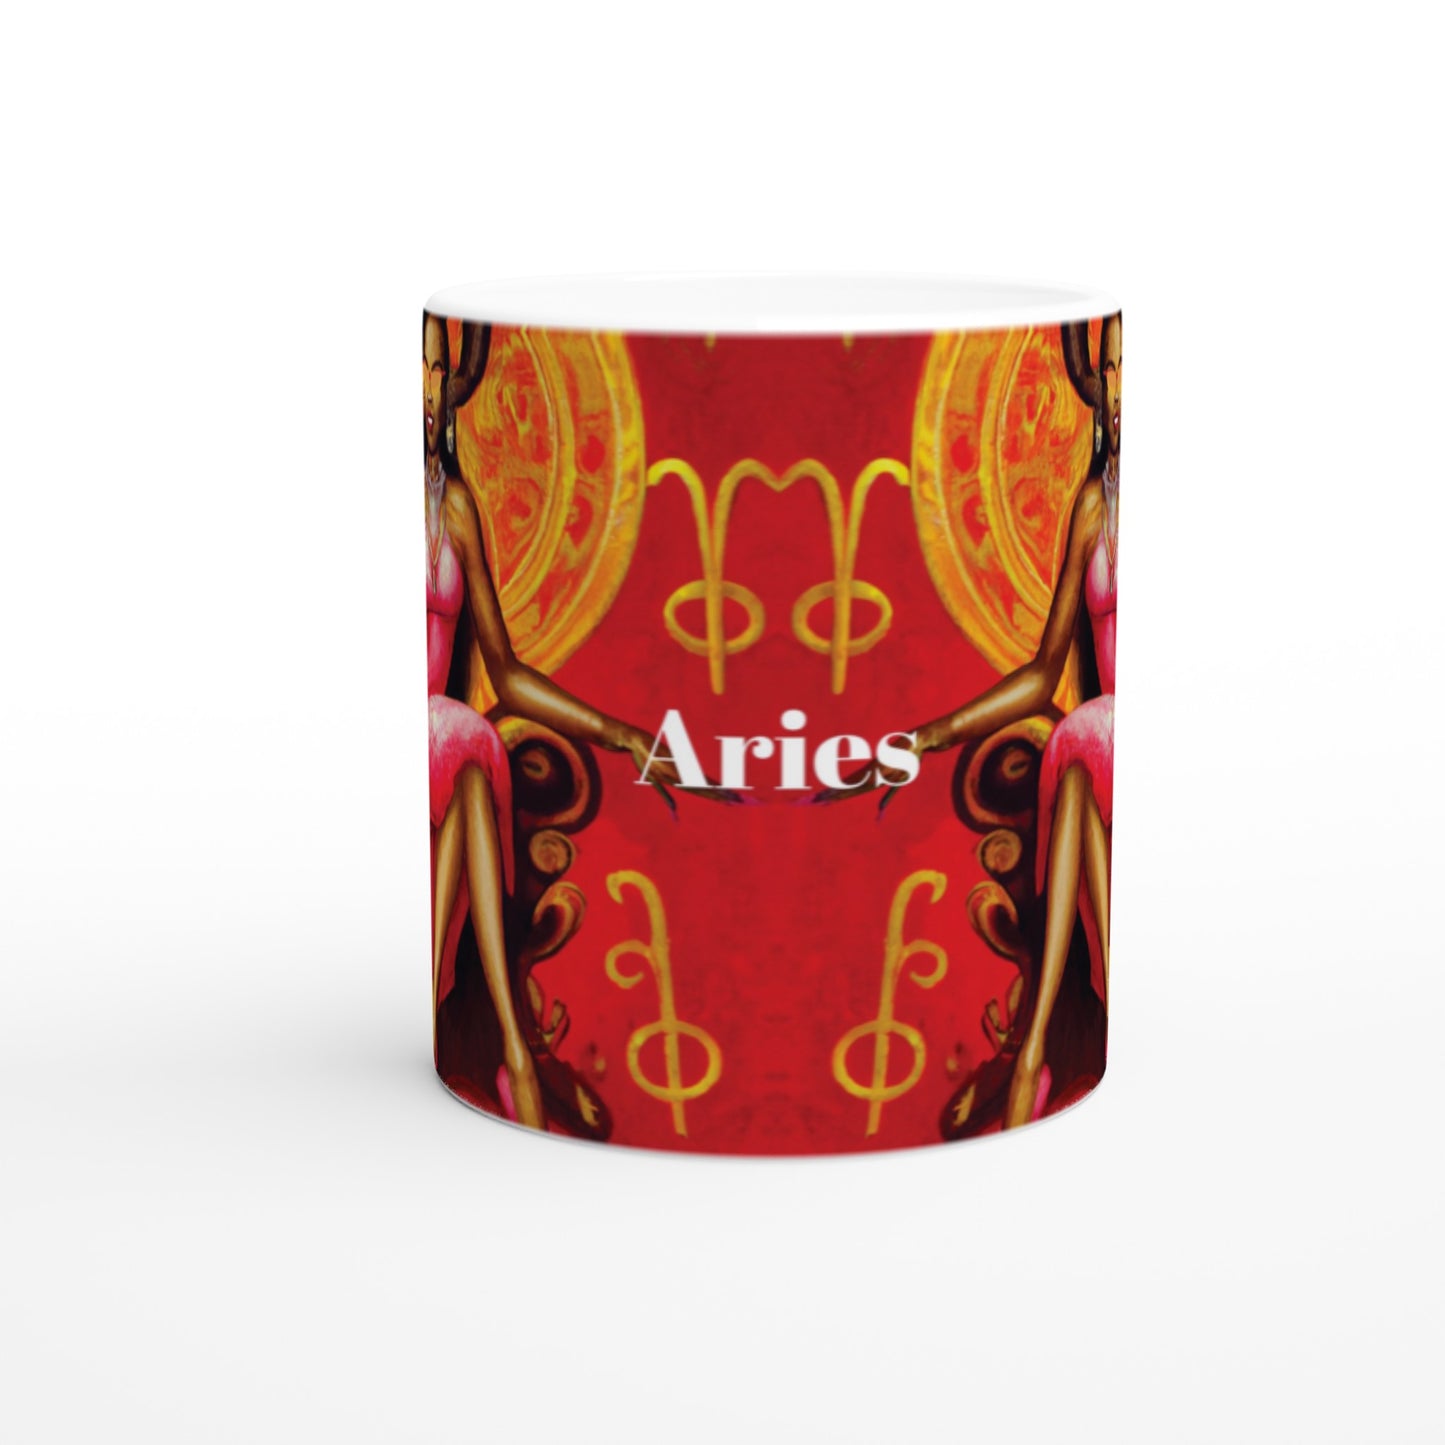 Yes Darling Aries Ceramic Mug -11oz